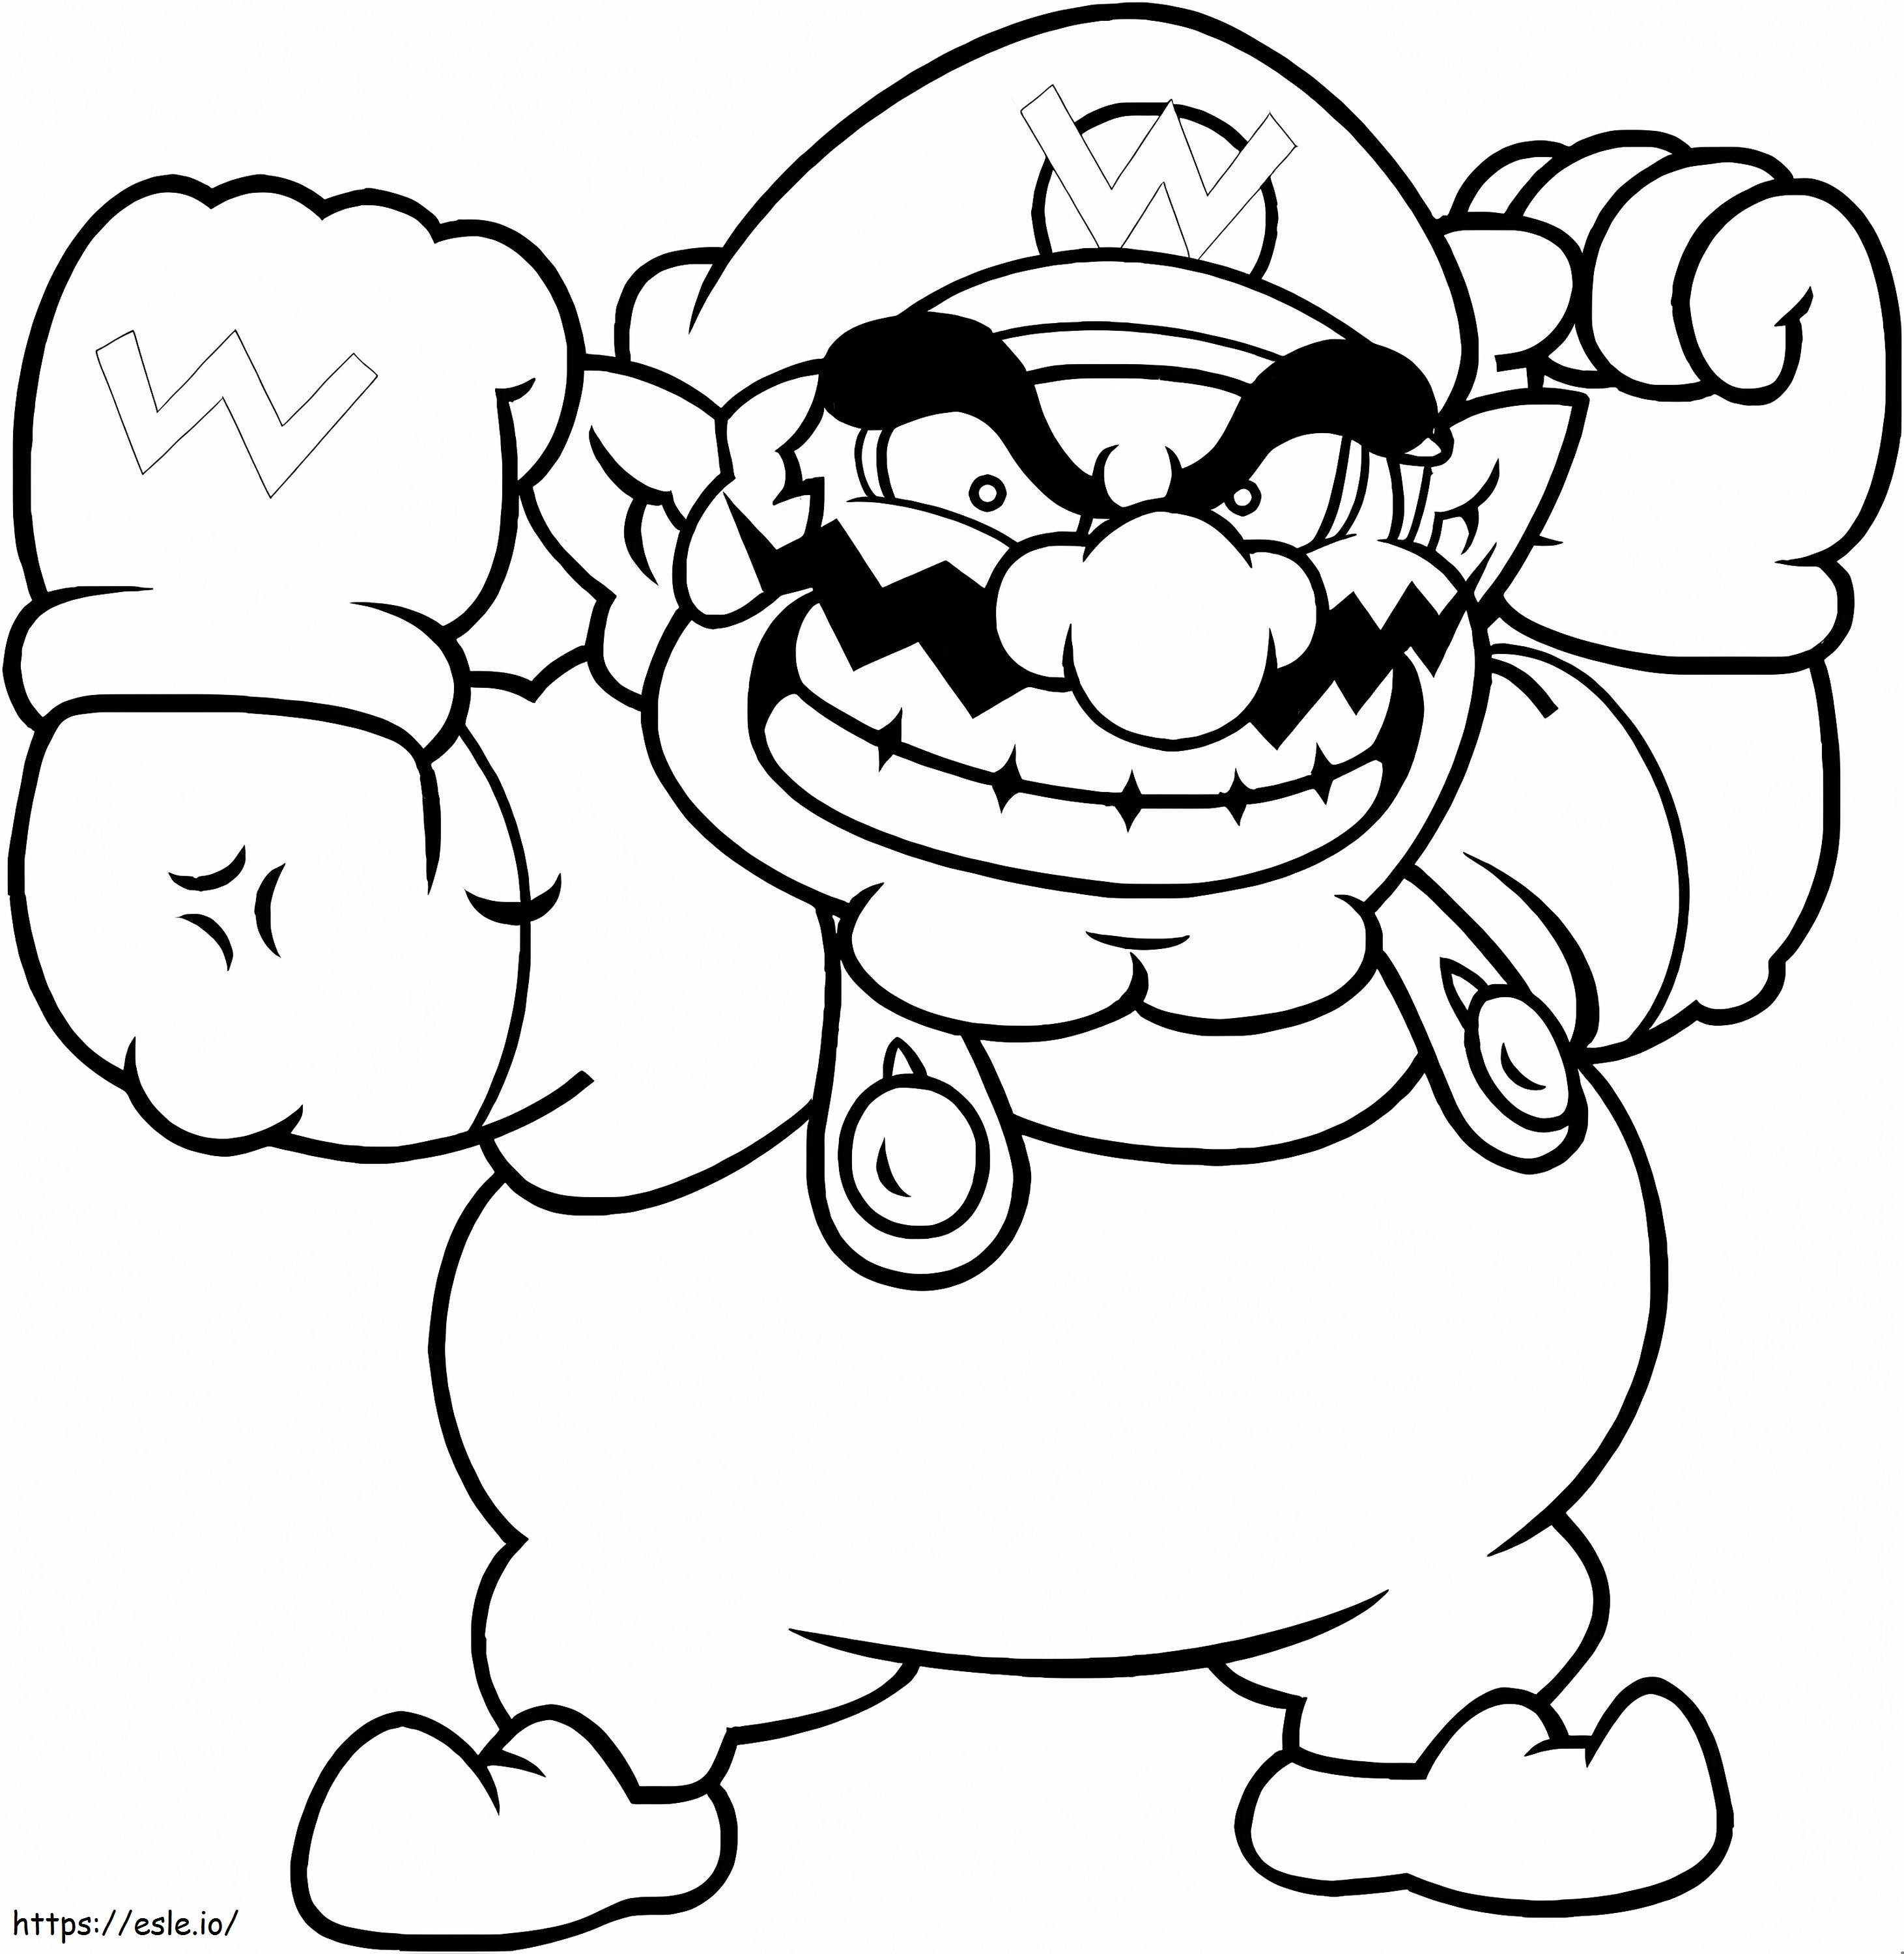 Wario z Super Mario kolorowanka